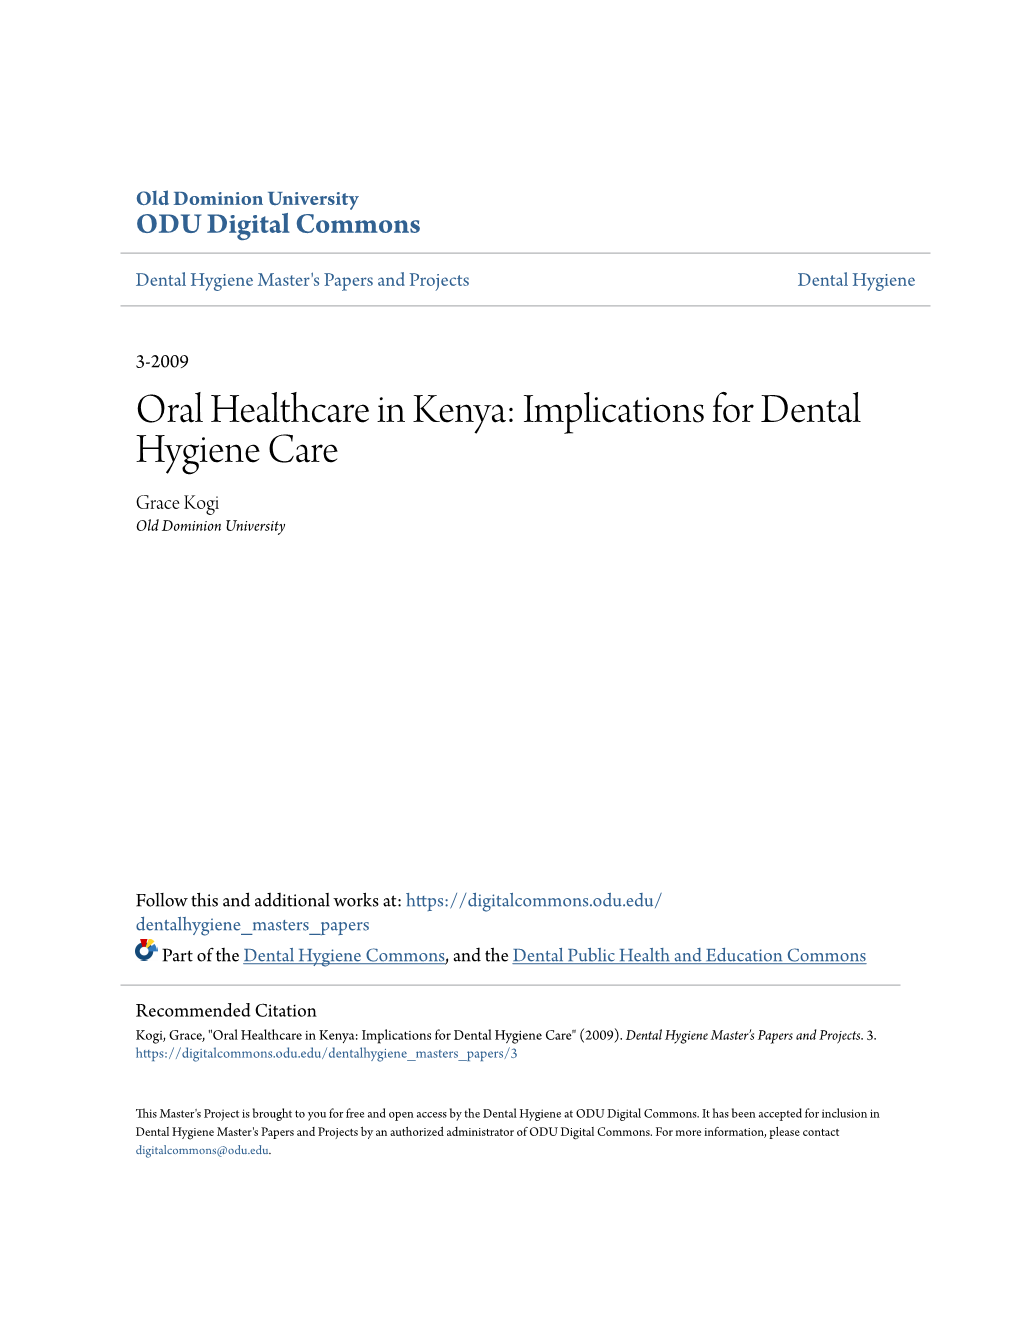 Oral Healthcare in Kenya: Implications for Dental Hygiene Care Grace Kogi Old Dominion University